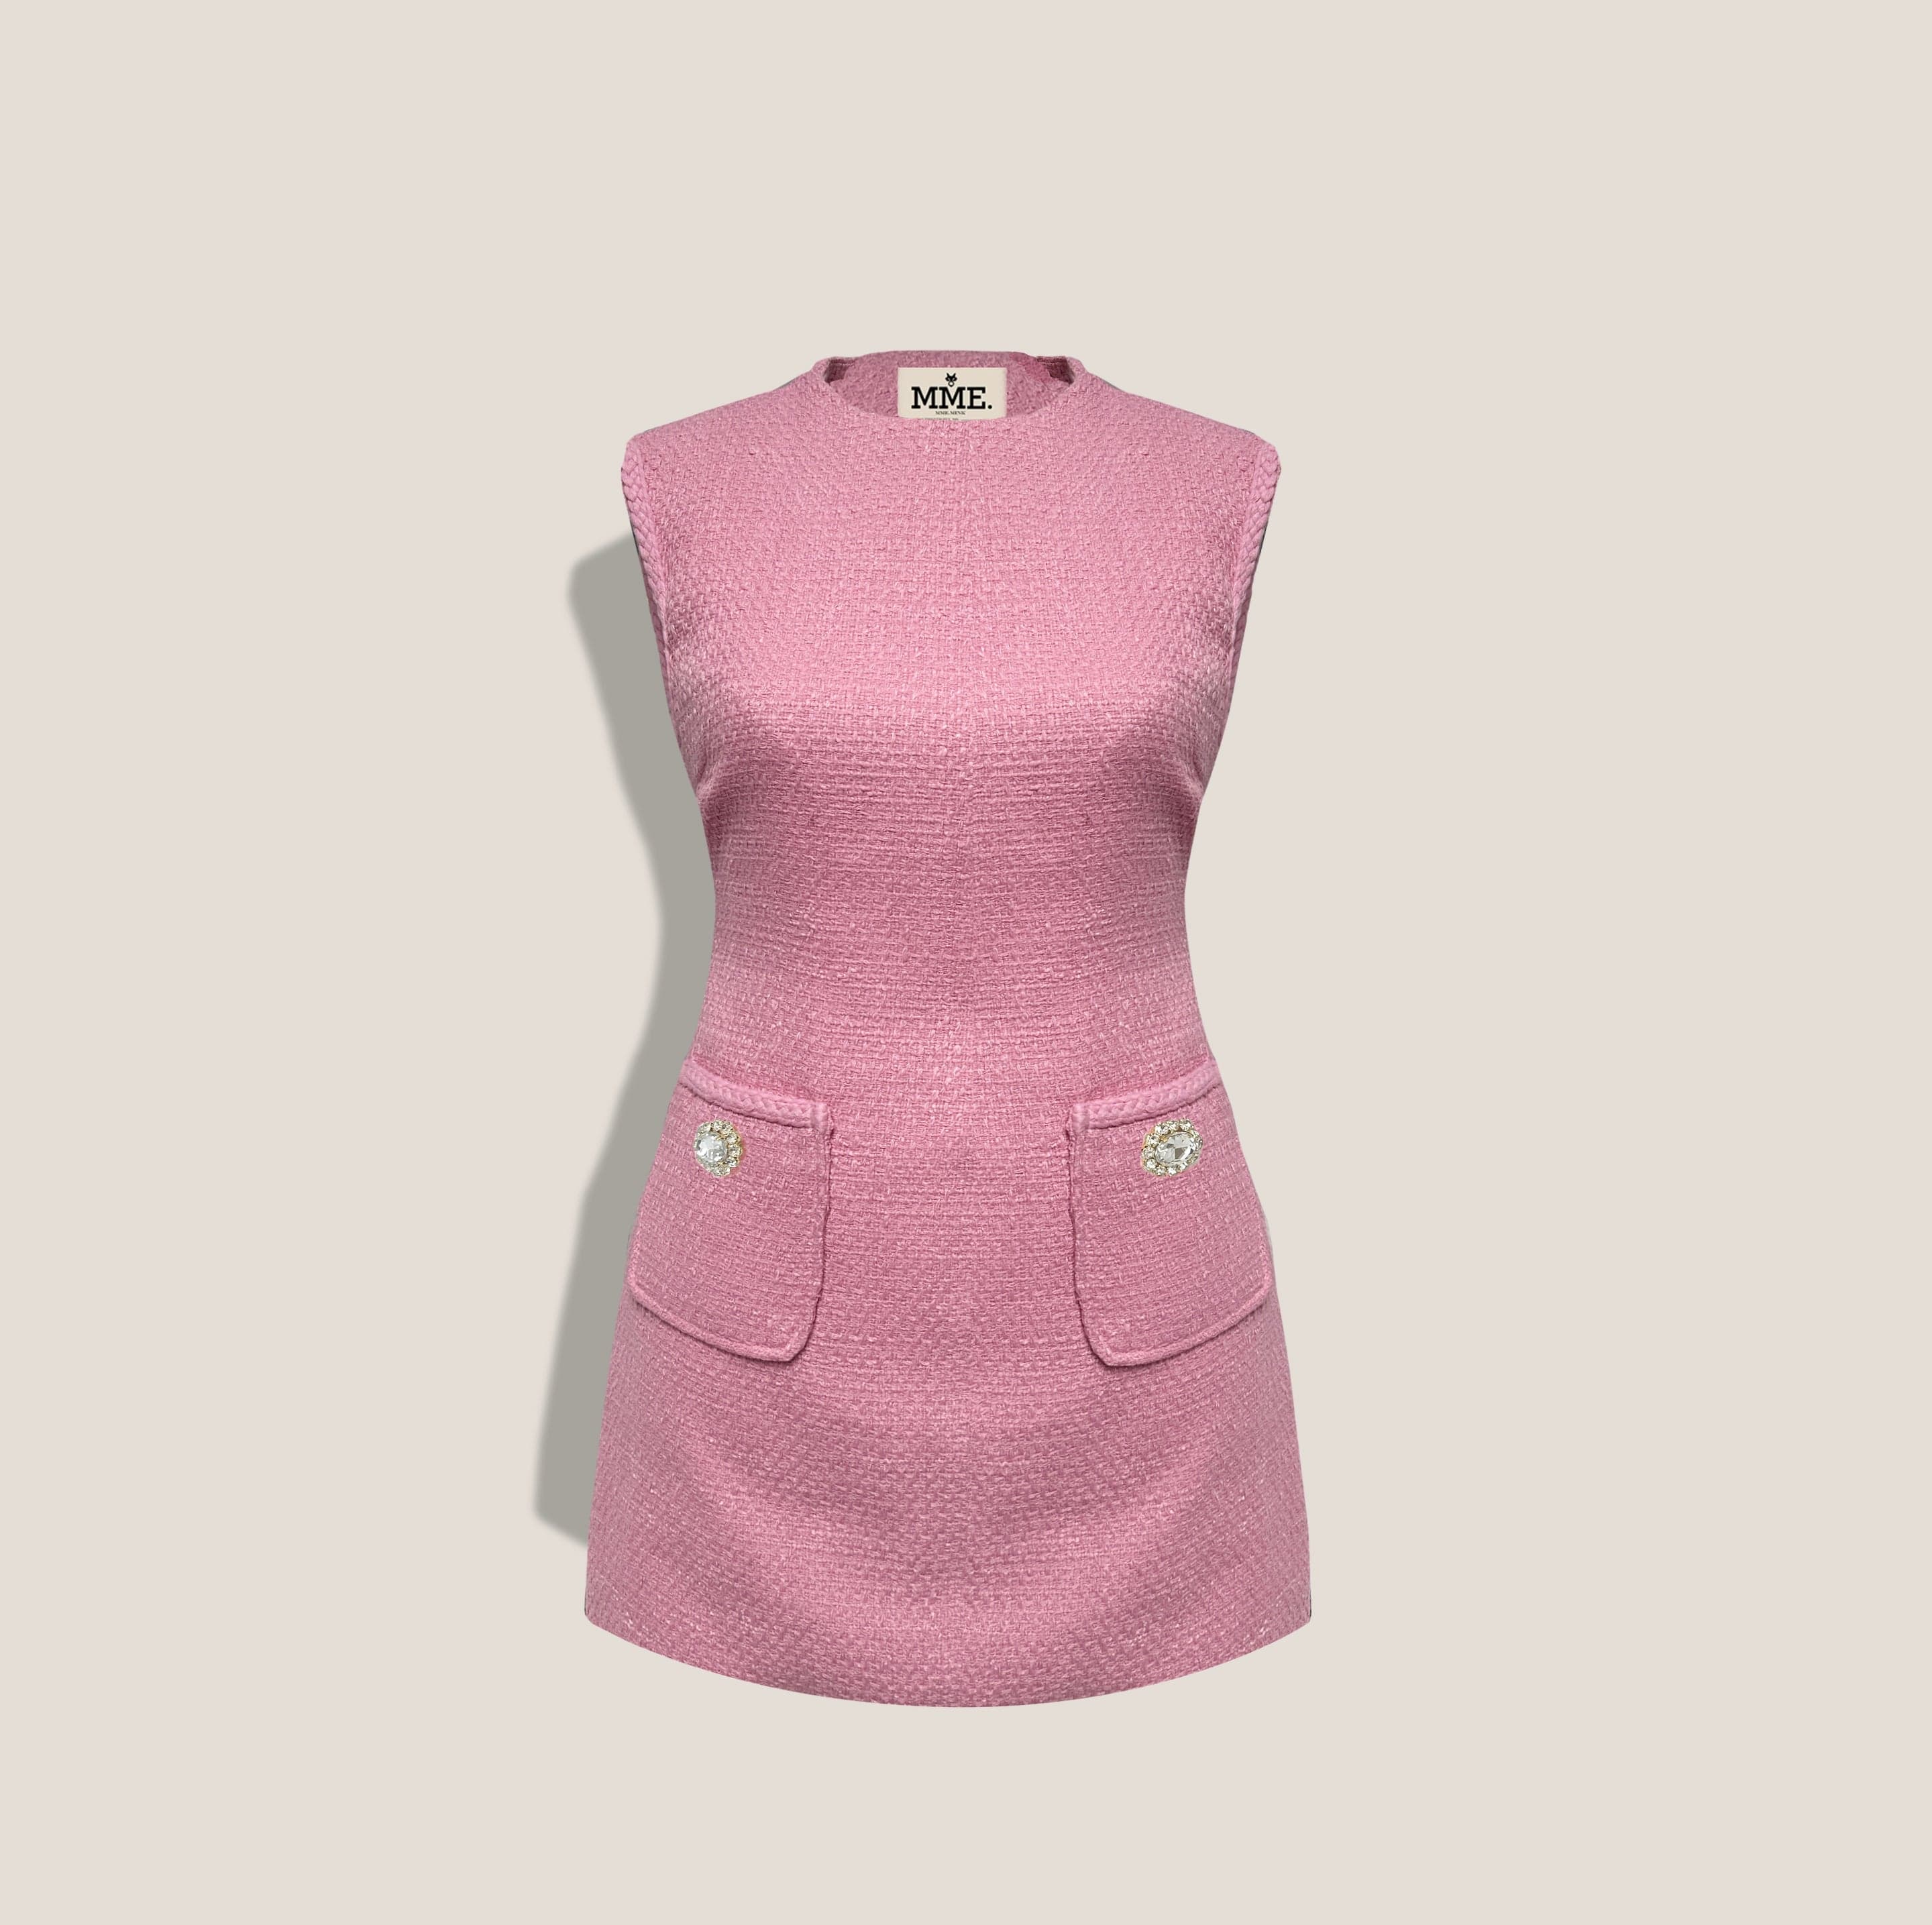 MME. Mink Dress MME. Turlington Bouclé Dress - Rose Pink